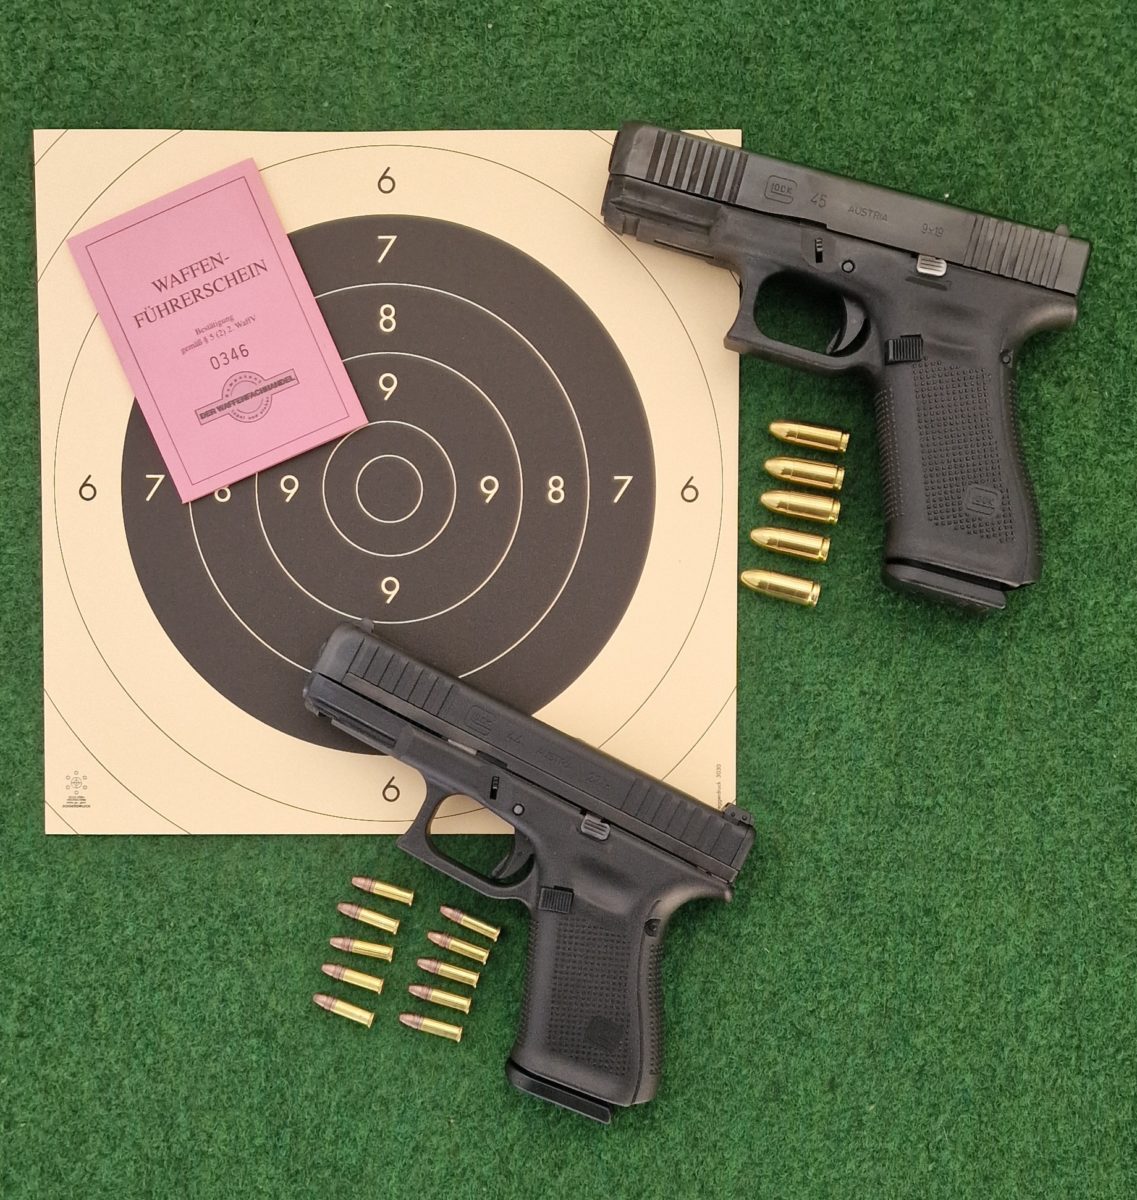 Waffenführerschein Standard Kärnten Shooting Range Blintendorf